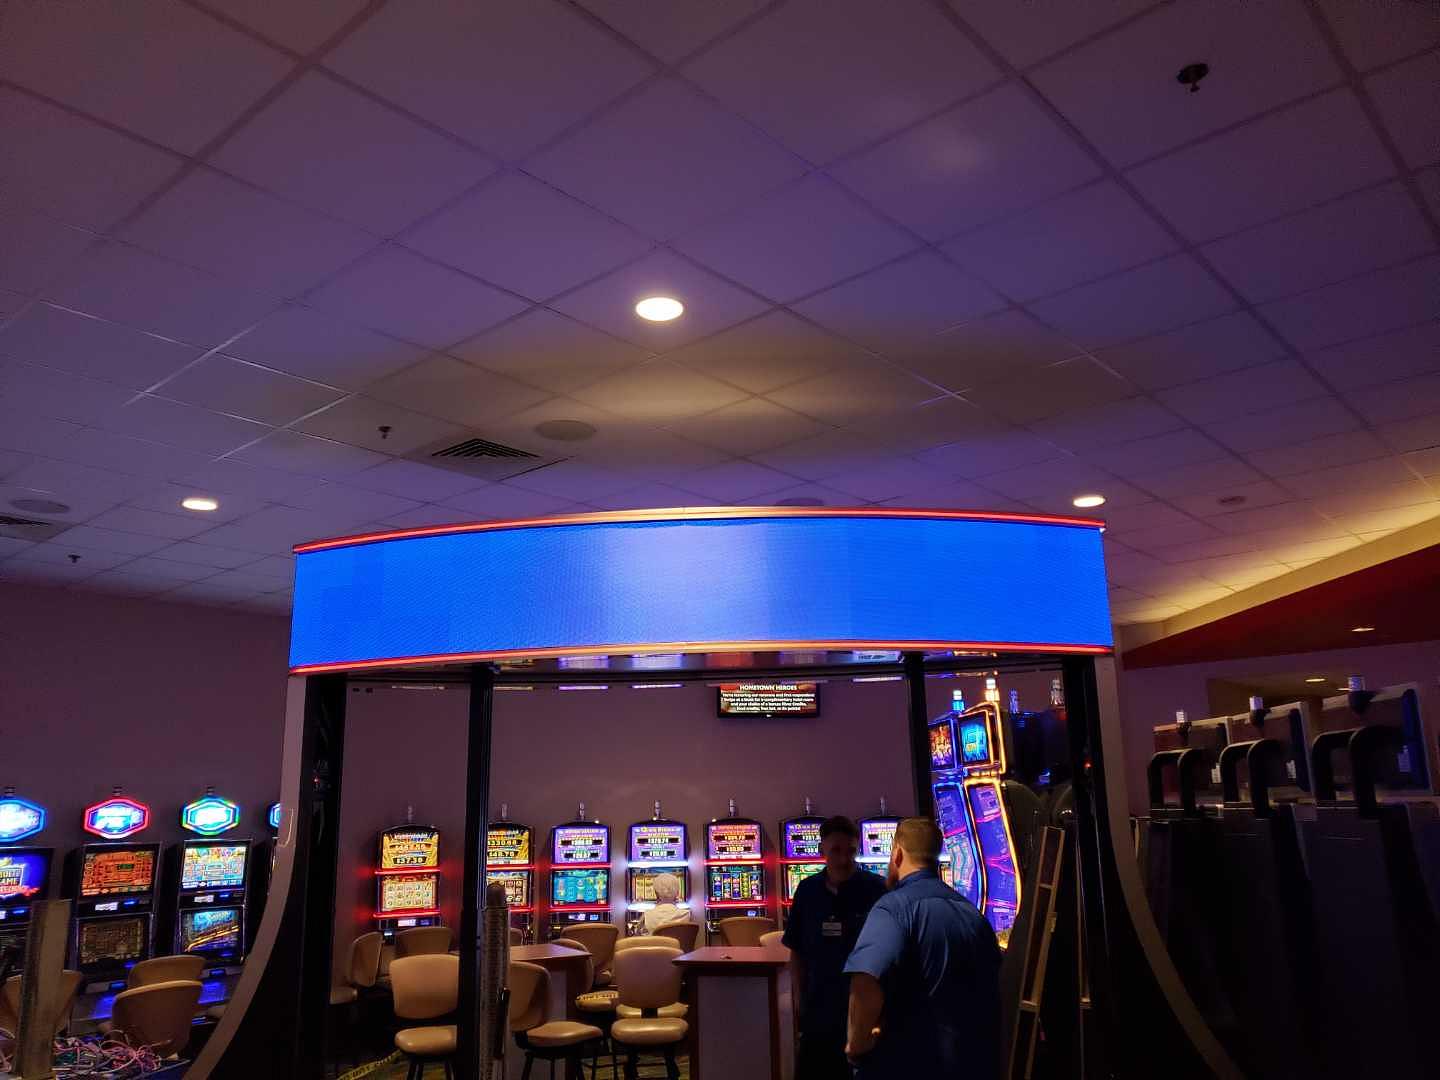 Little Casino Michigan Mainstee EMC LED Digital display